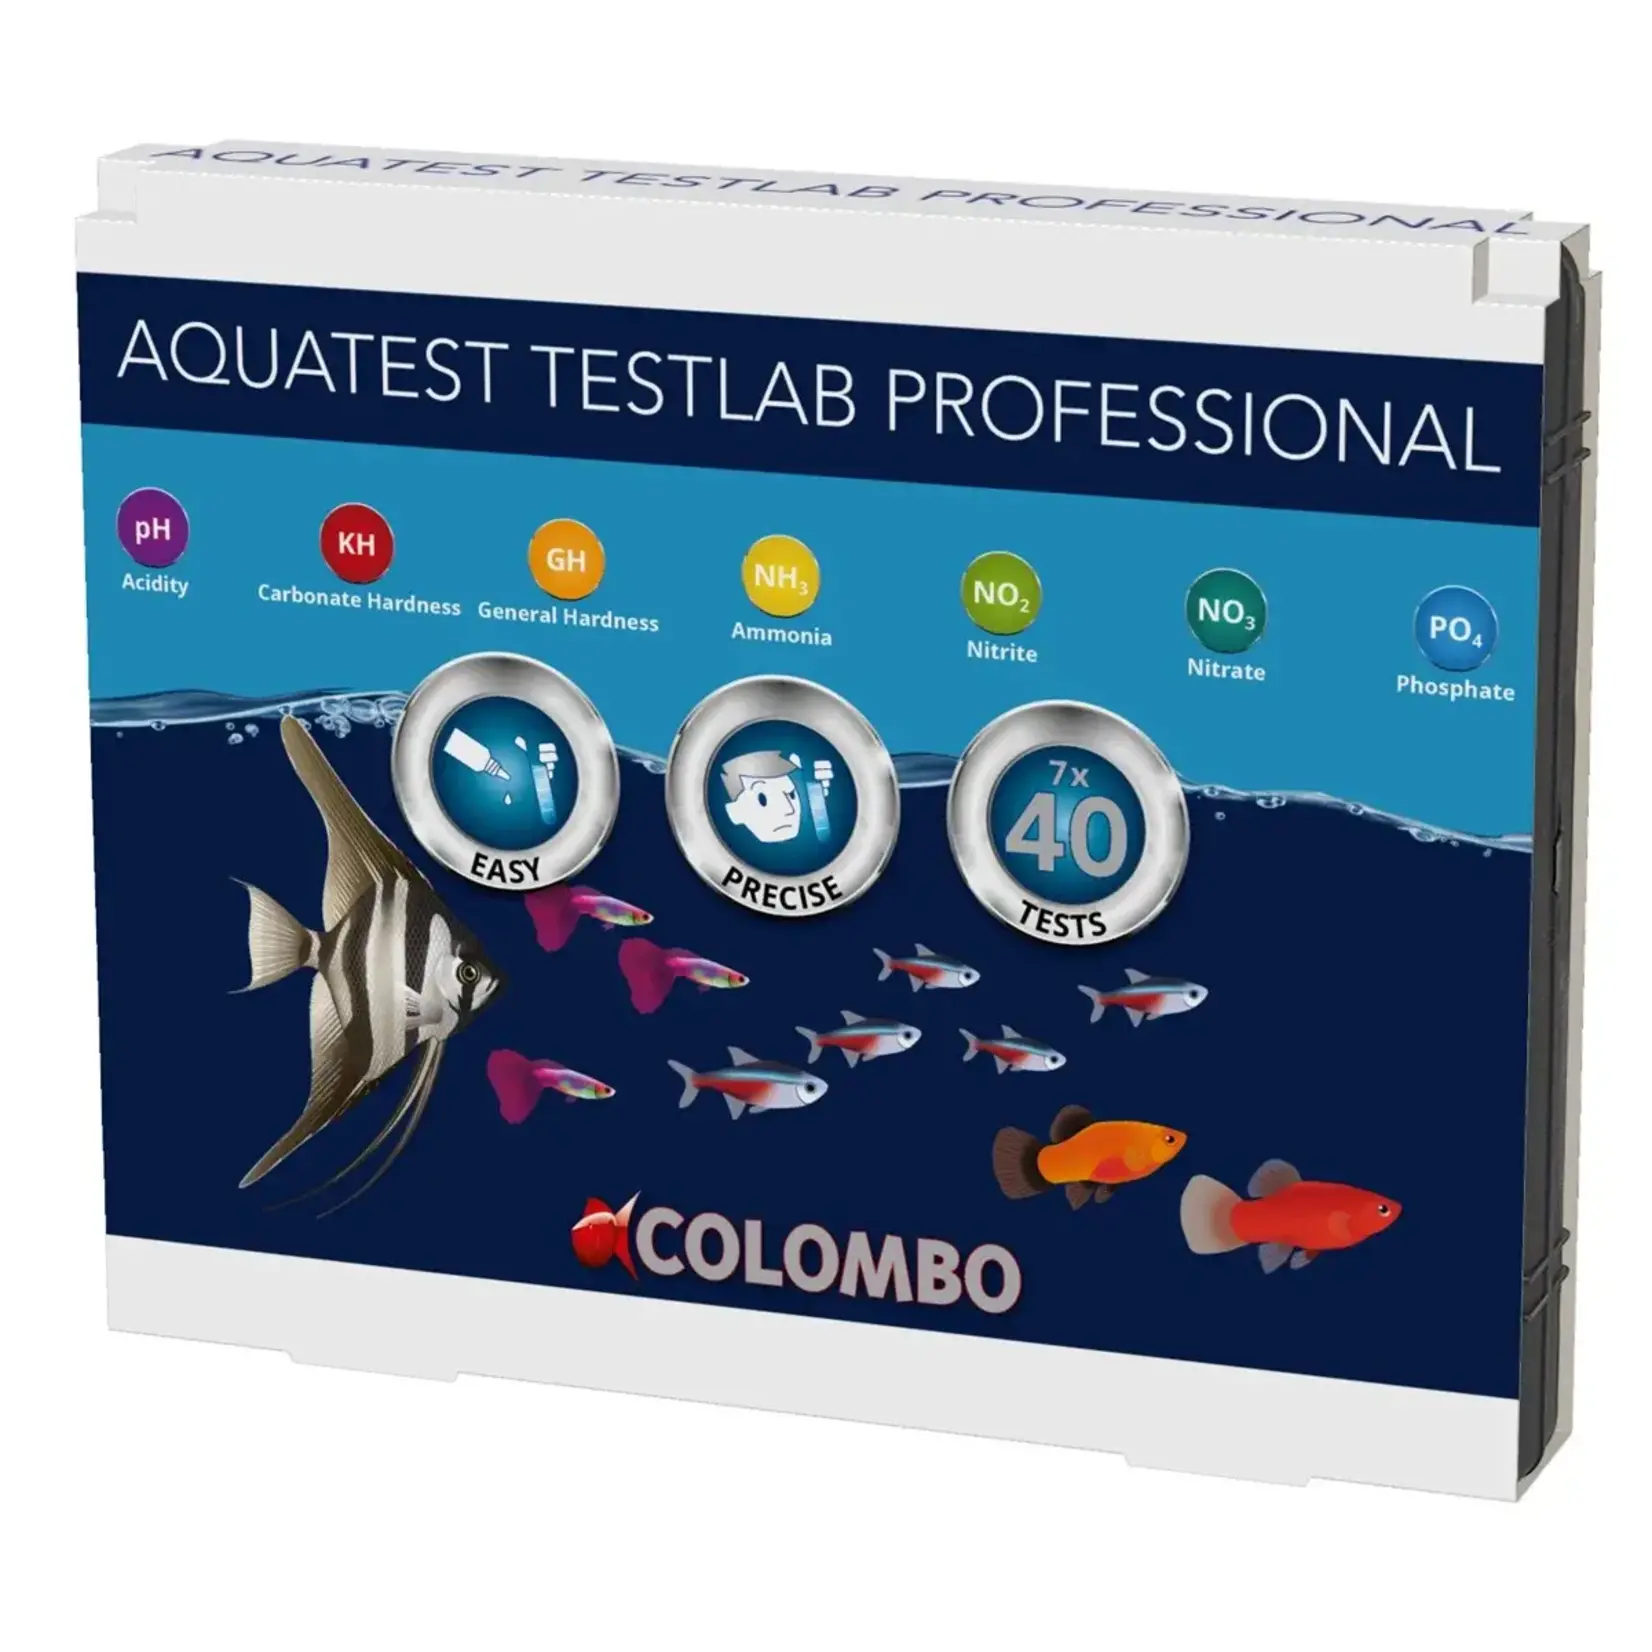 Aqua testlab pro